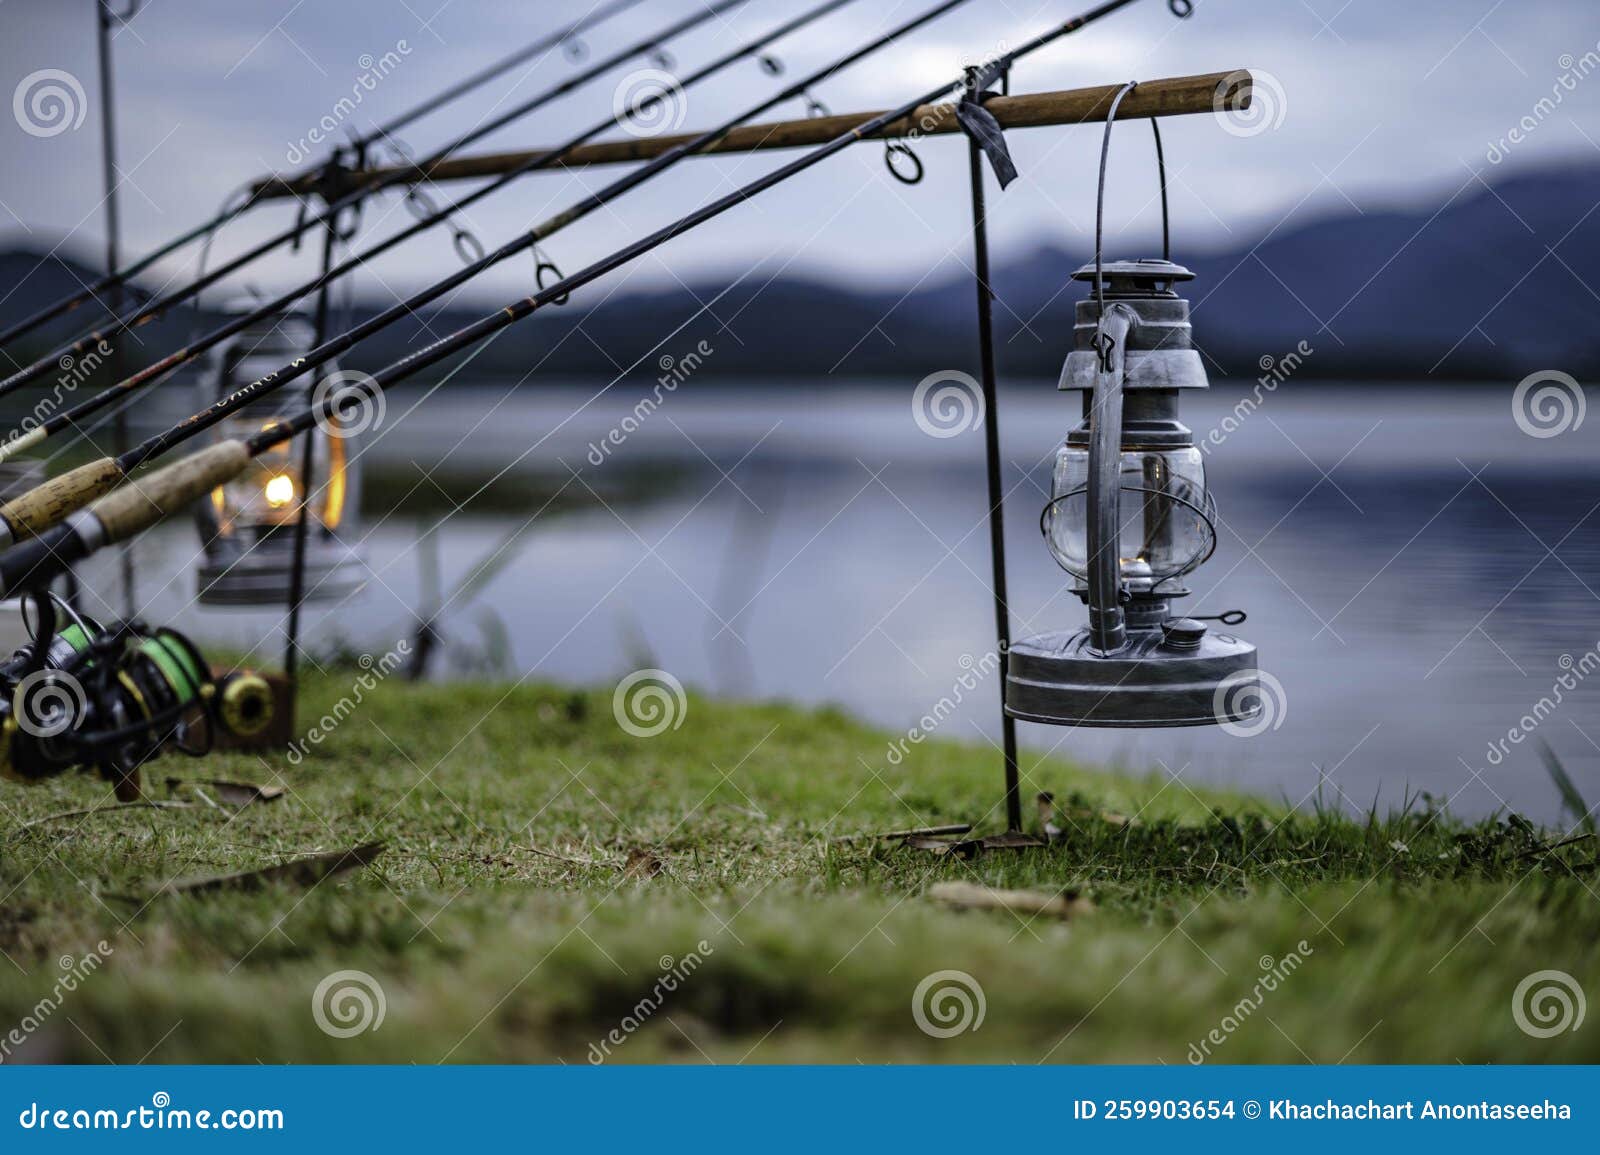 https://thumbs.dreamstime.com/z/kerosene-lamps-lit-next-to-fishing-rods-to-light-up-night-khao-chuk-dam-kerosene-lamps-lit-next-to-fishing-rods-to-259903654.jpg